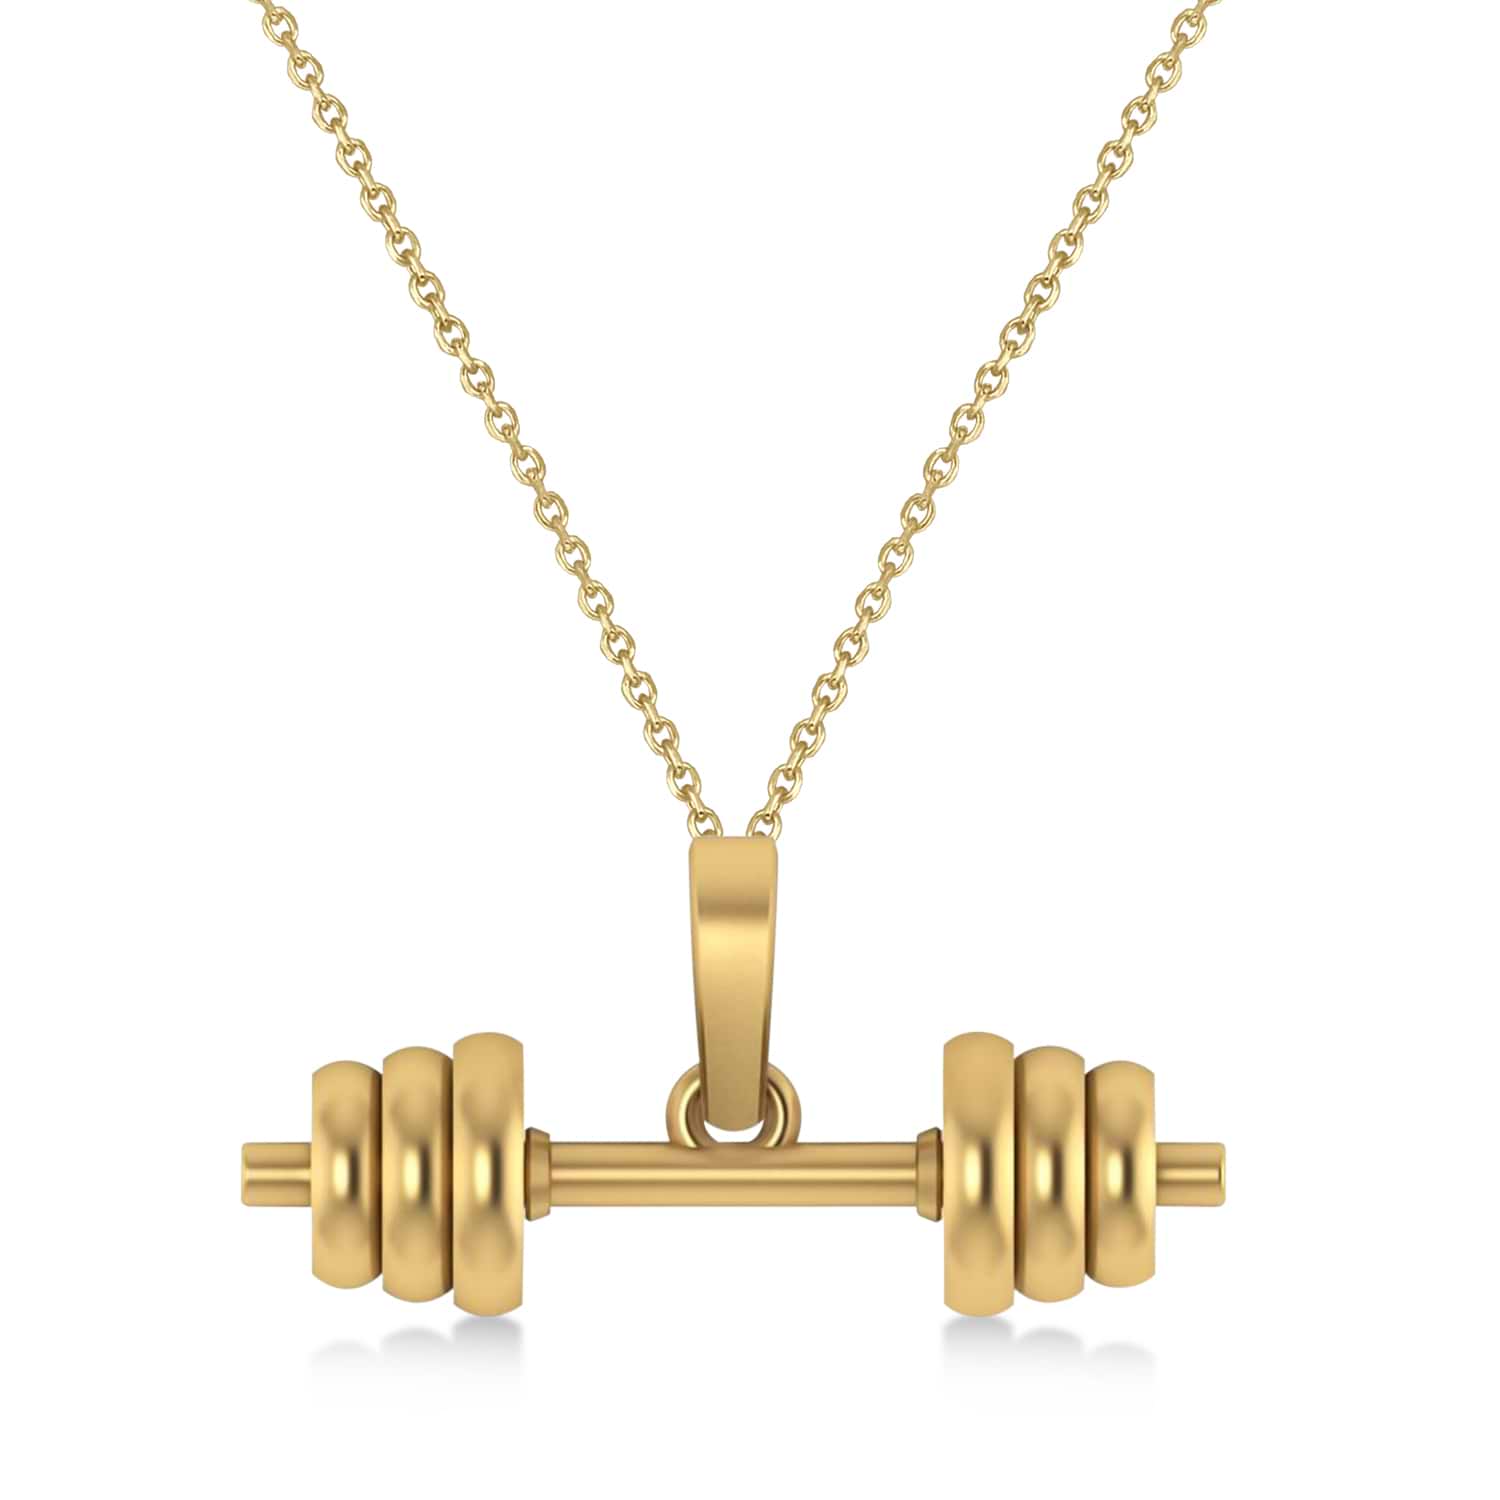 Dumbbell Charm Men's Pendant Necklace 14K Yellow Gold